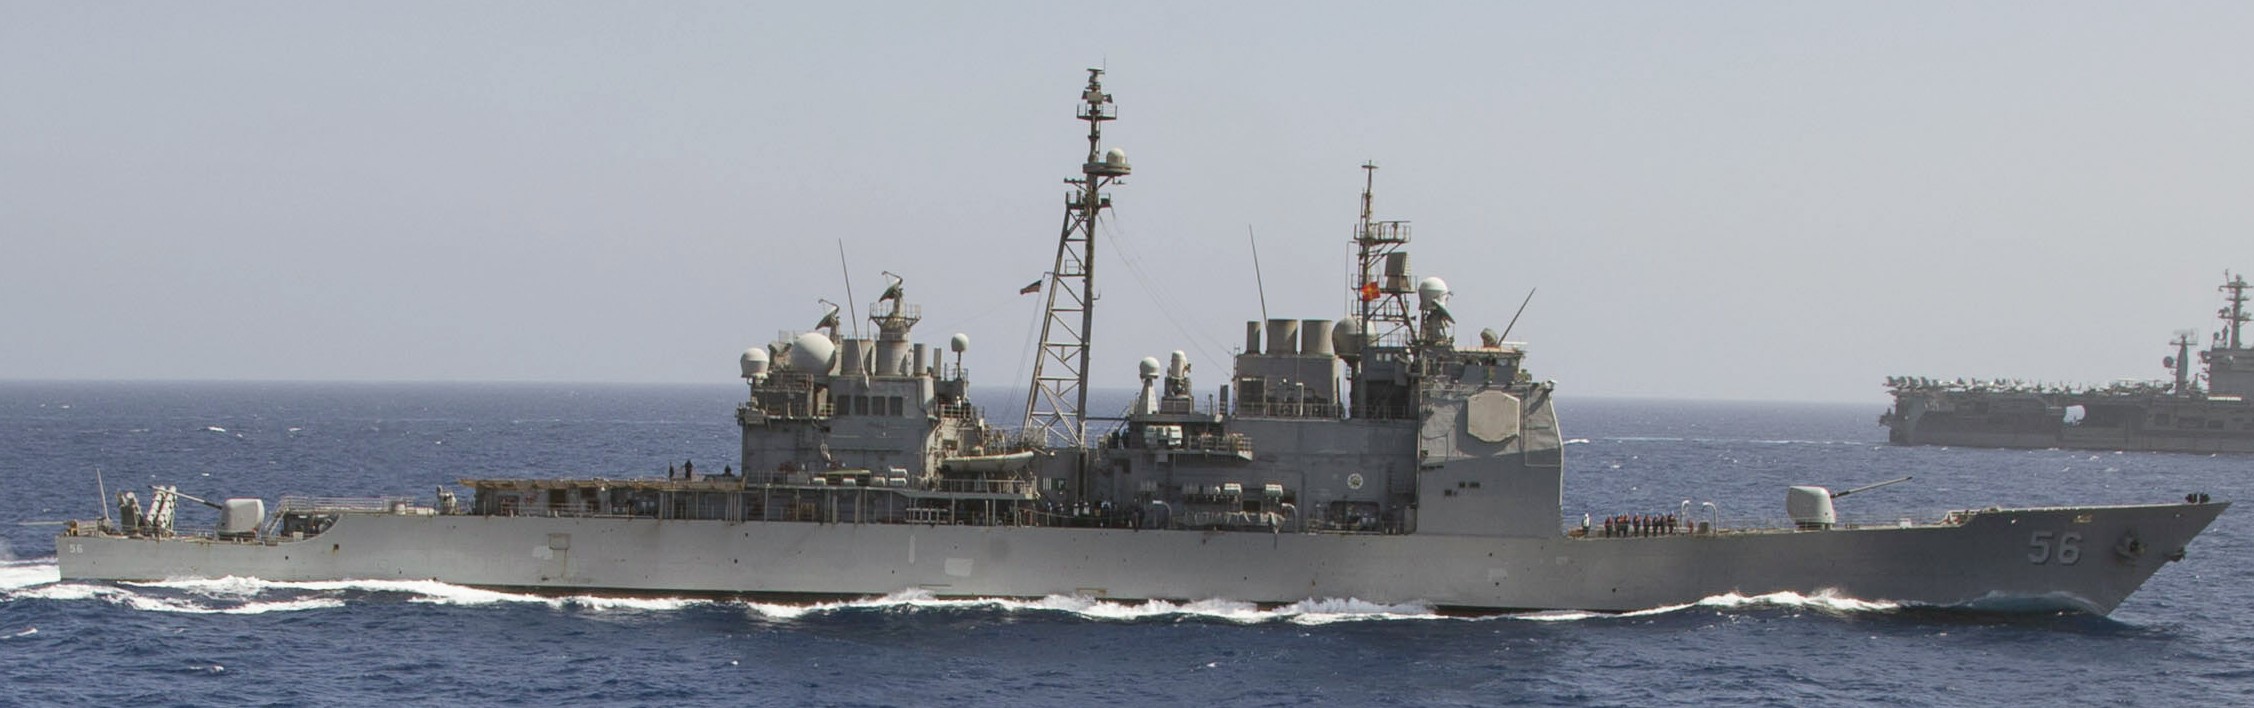 cg-56 uss san jacinto ticonderoga class guided missile cruiser aegis us navy 47